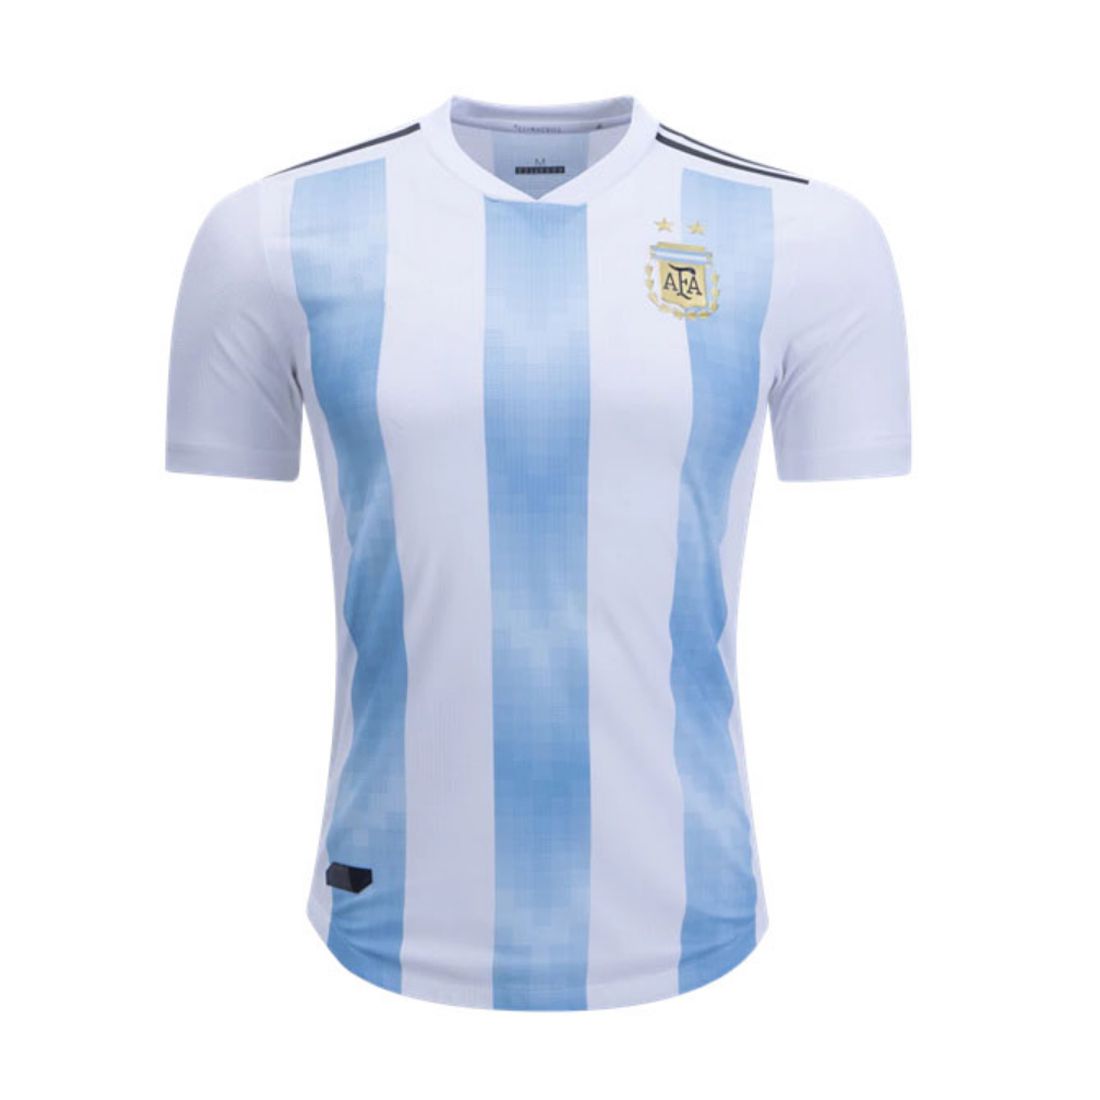 argentina jersey buy online